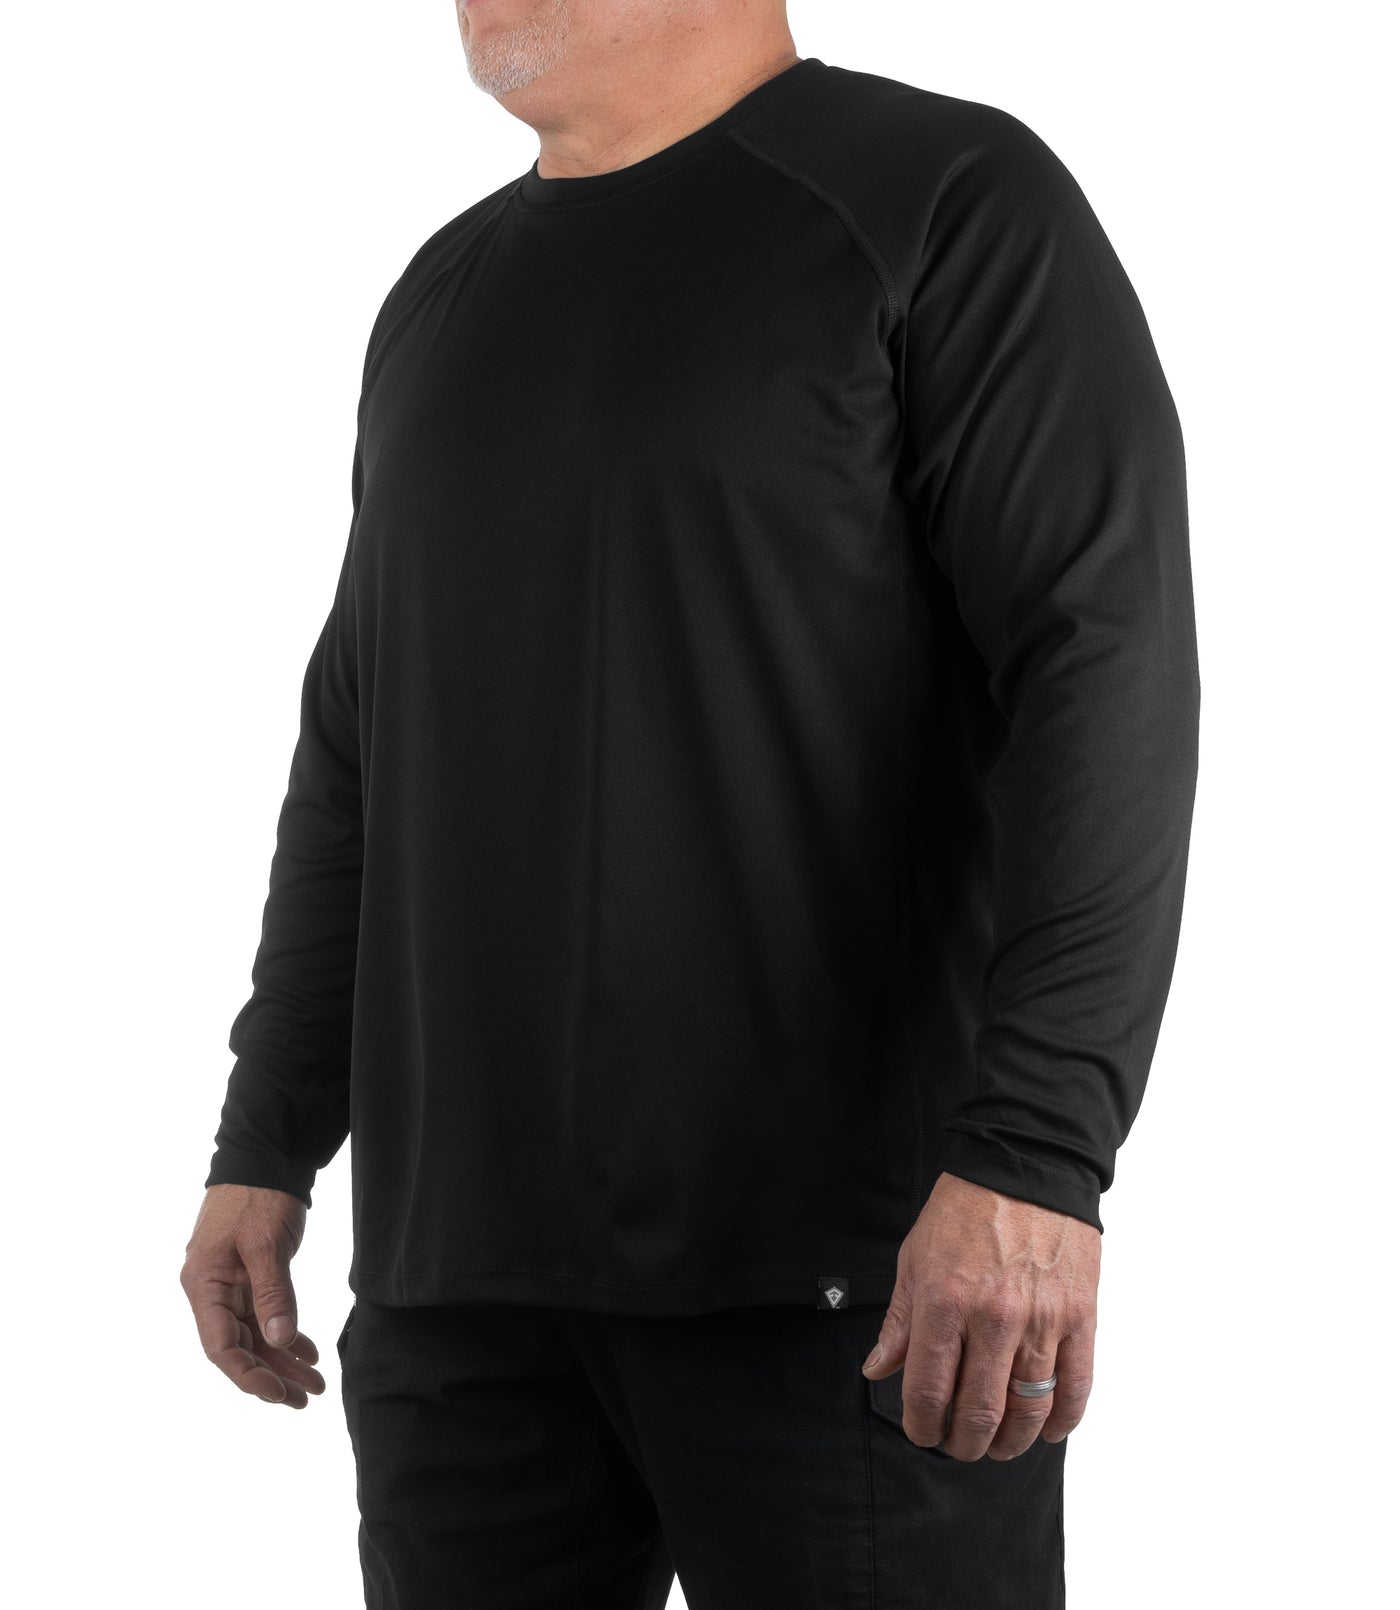 Men's Performance Long Sleeve T-Shirt – First Tactical